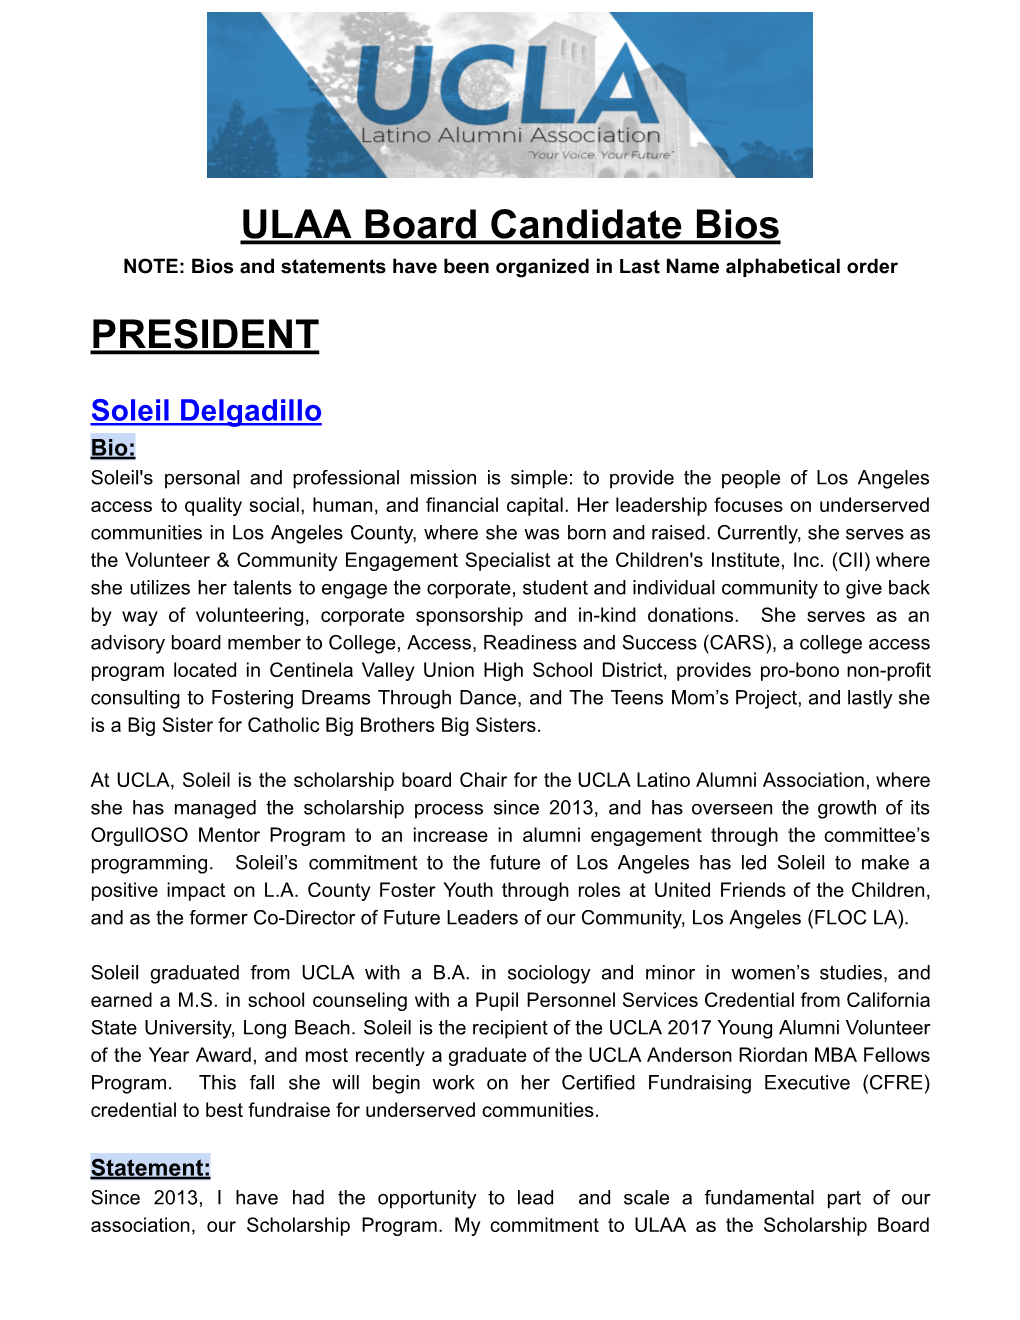 ULAA Board Candidate Bios PRESIDENT